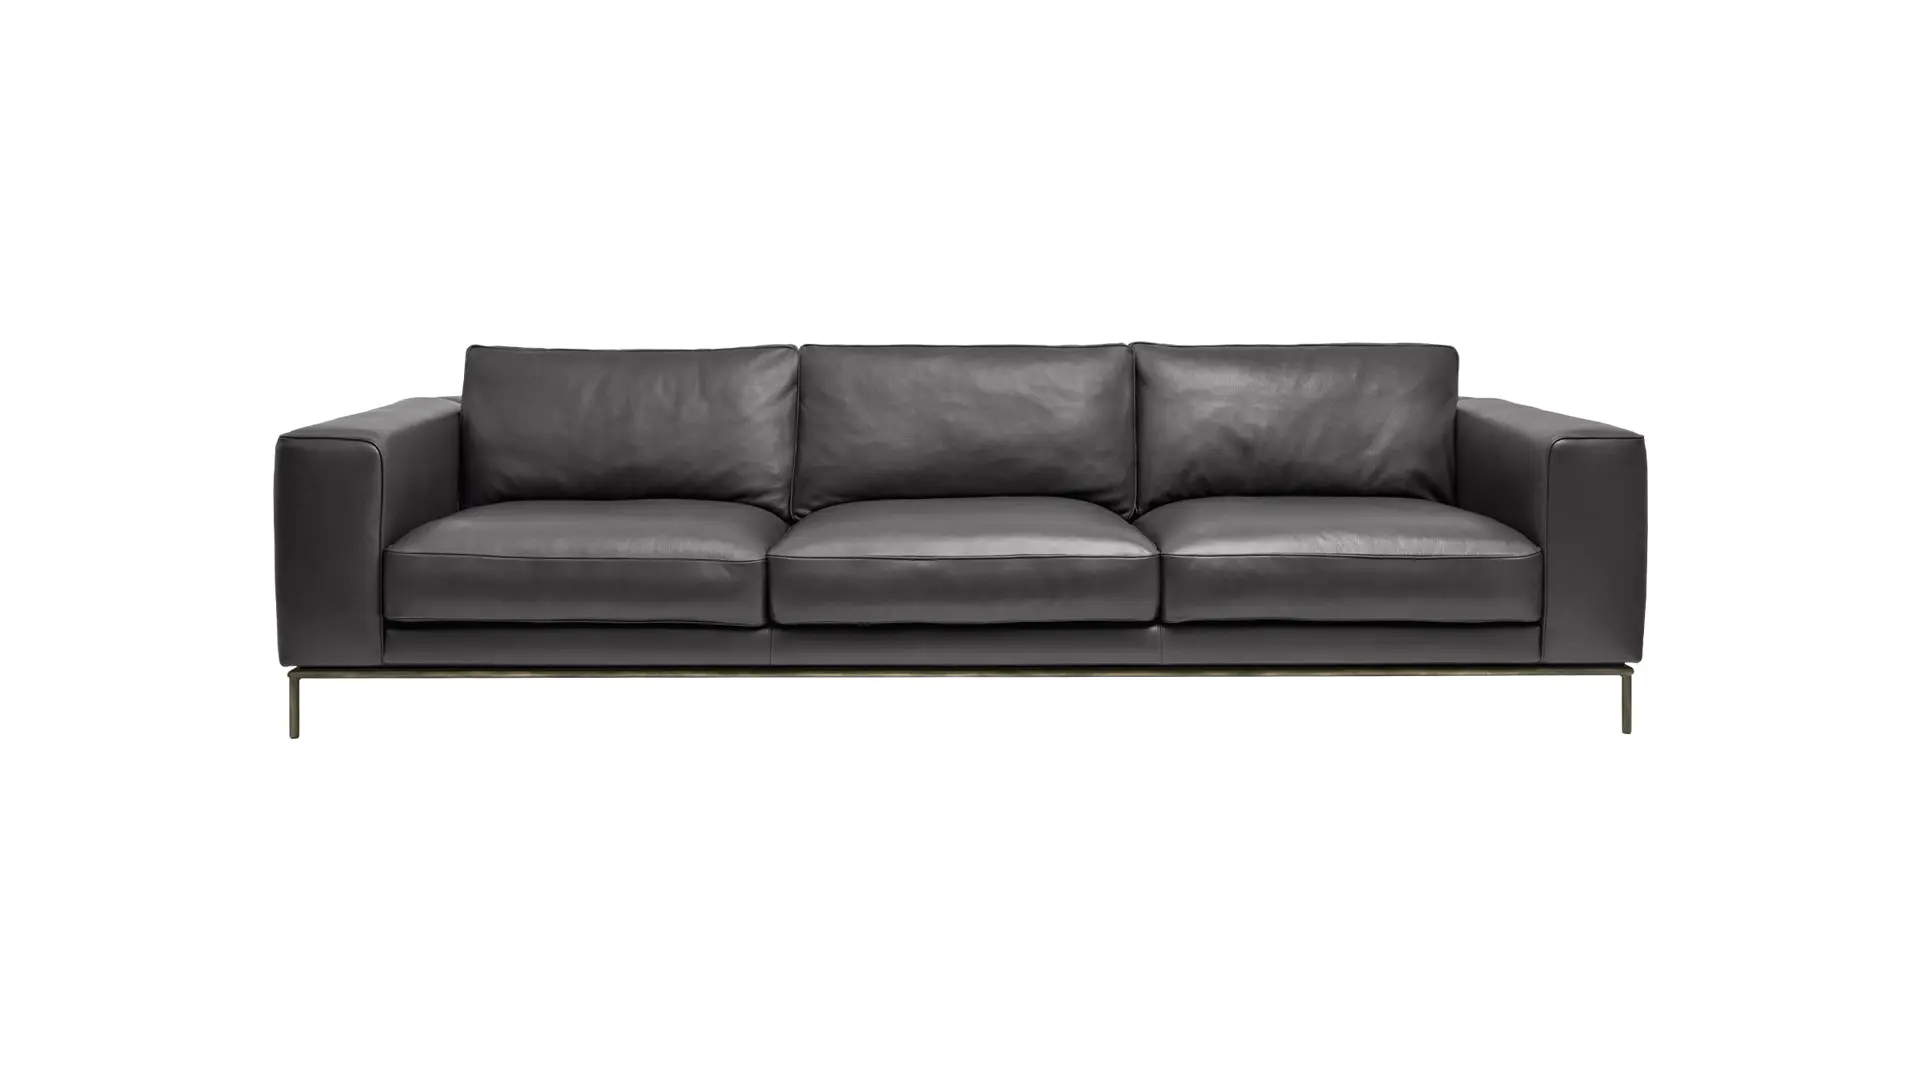 Minimalist Italian Luxury Black Sectional Big Leather Sofa Couch Comfortable 3 seater Sofa